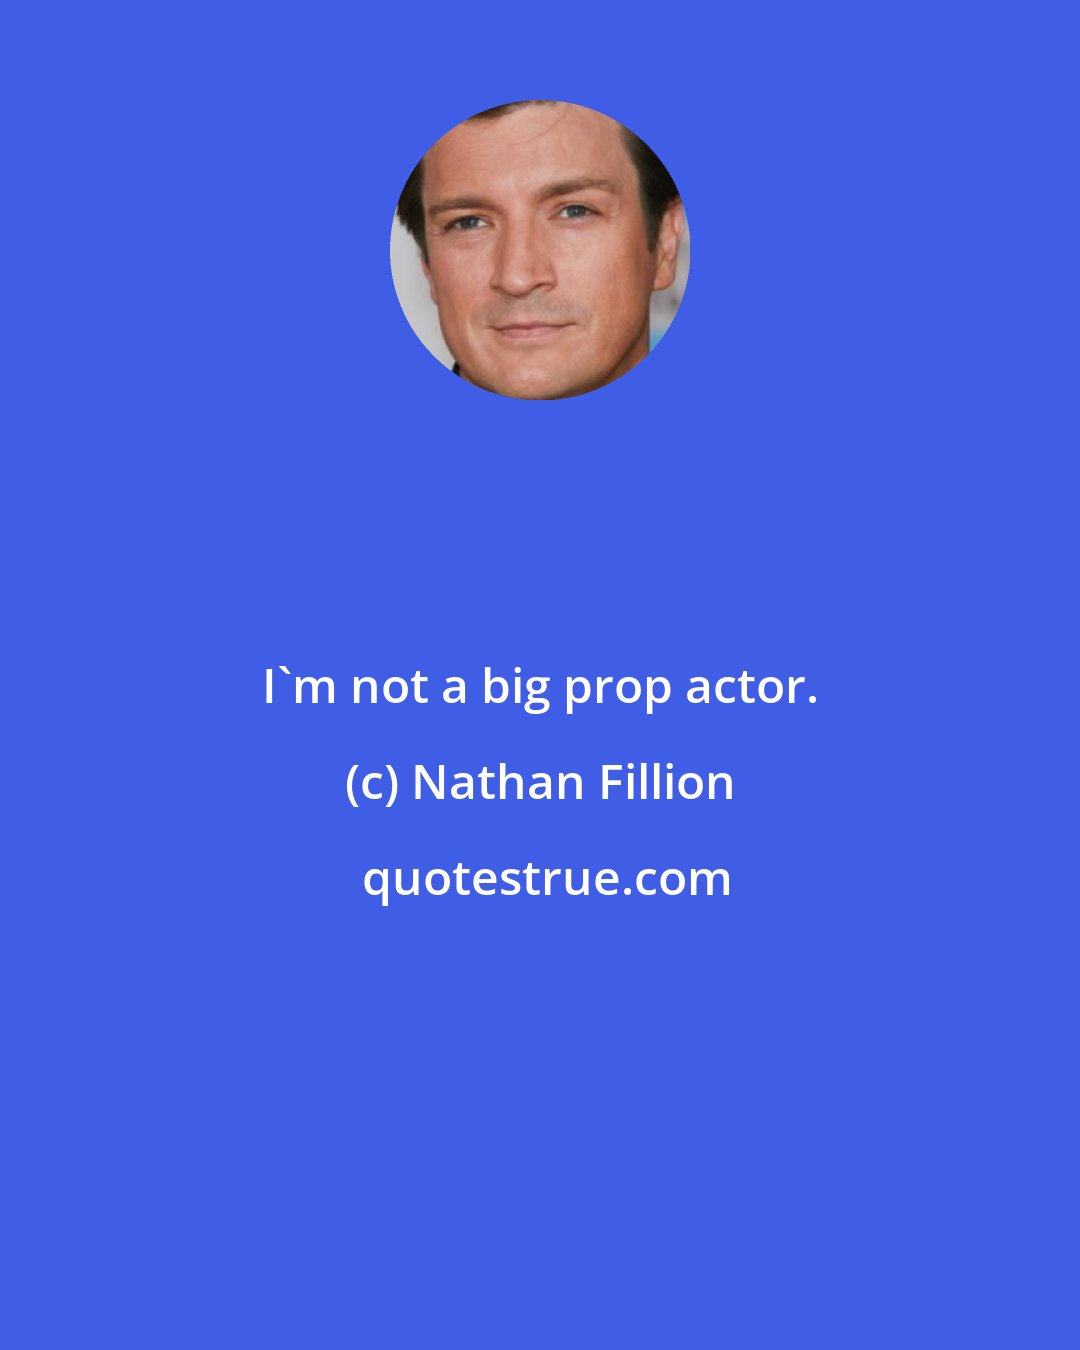 Nathan Fillion: I'm not a big prop actor.